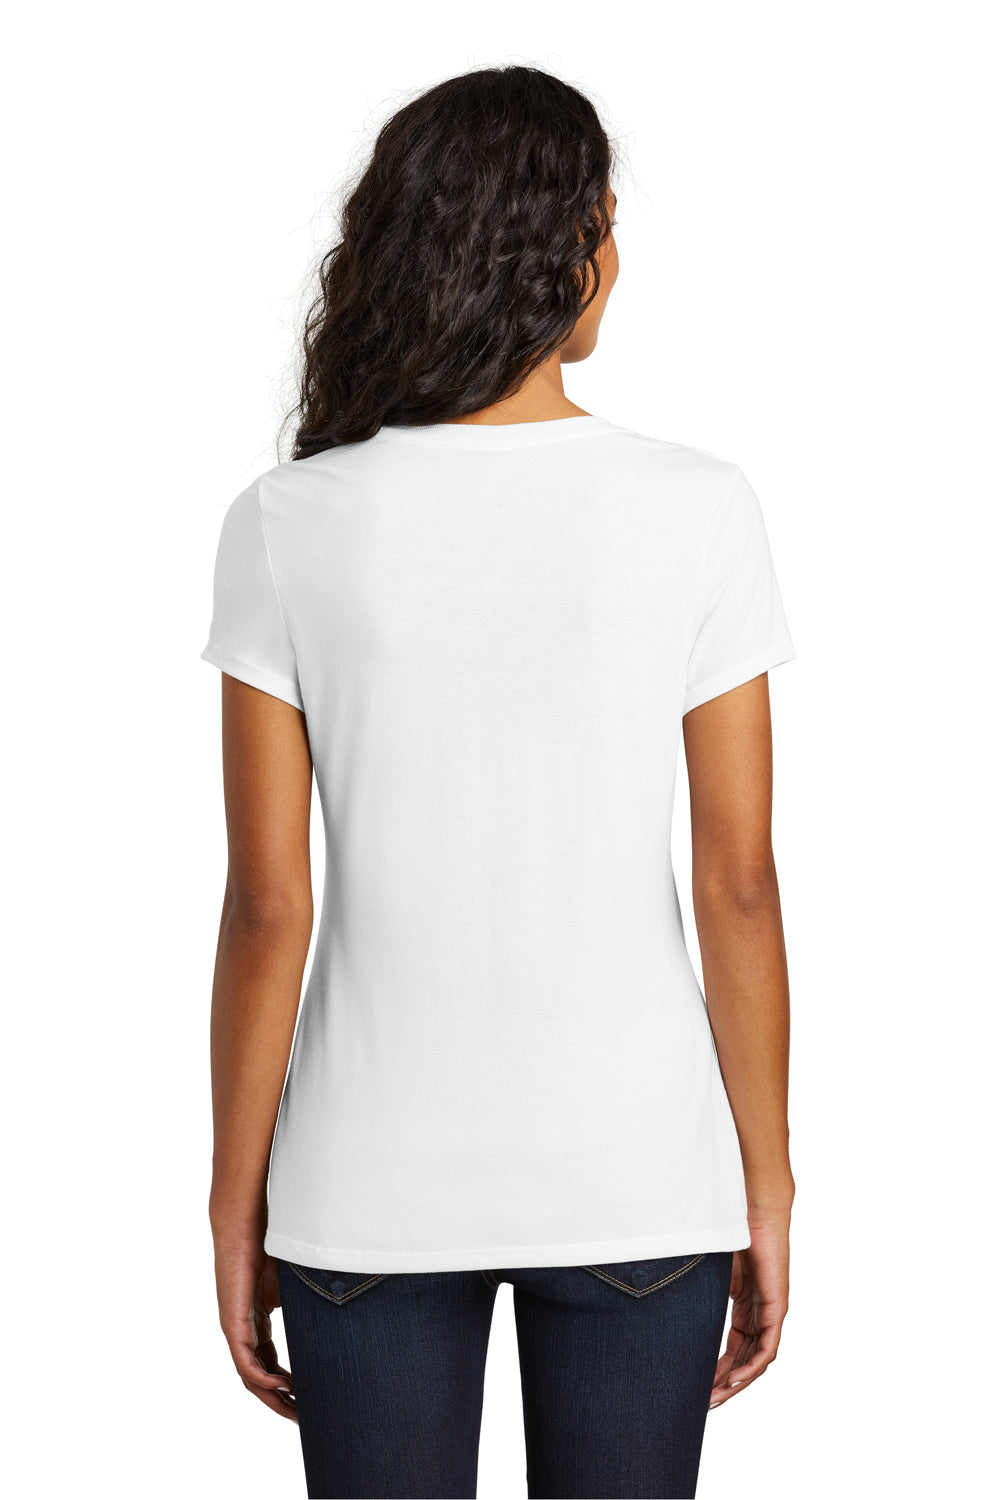 District DM1350L Womens Perfect Tri Short Sleeve V-Neck T-Shirt White Back